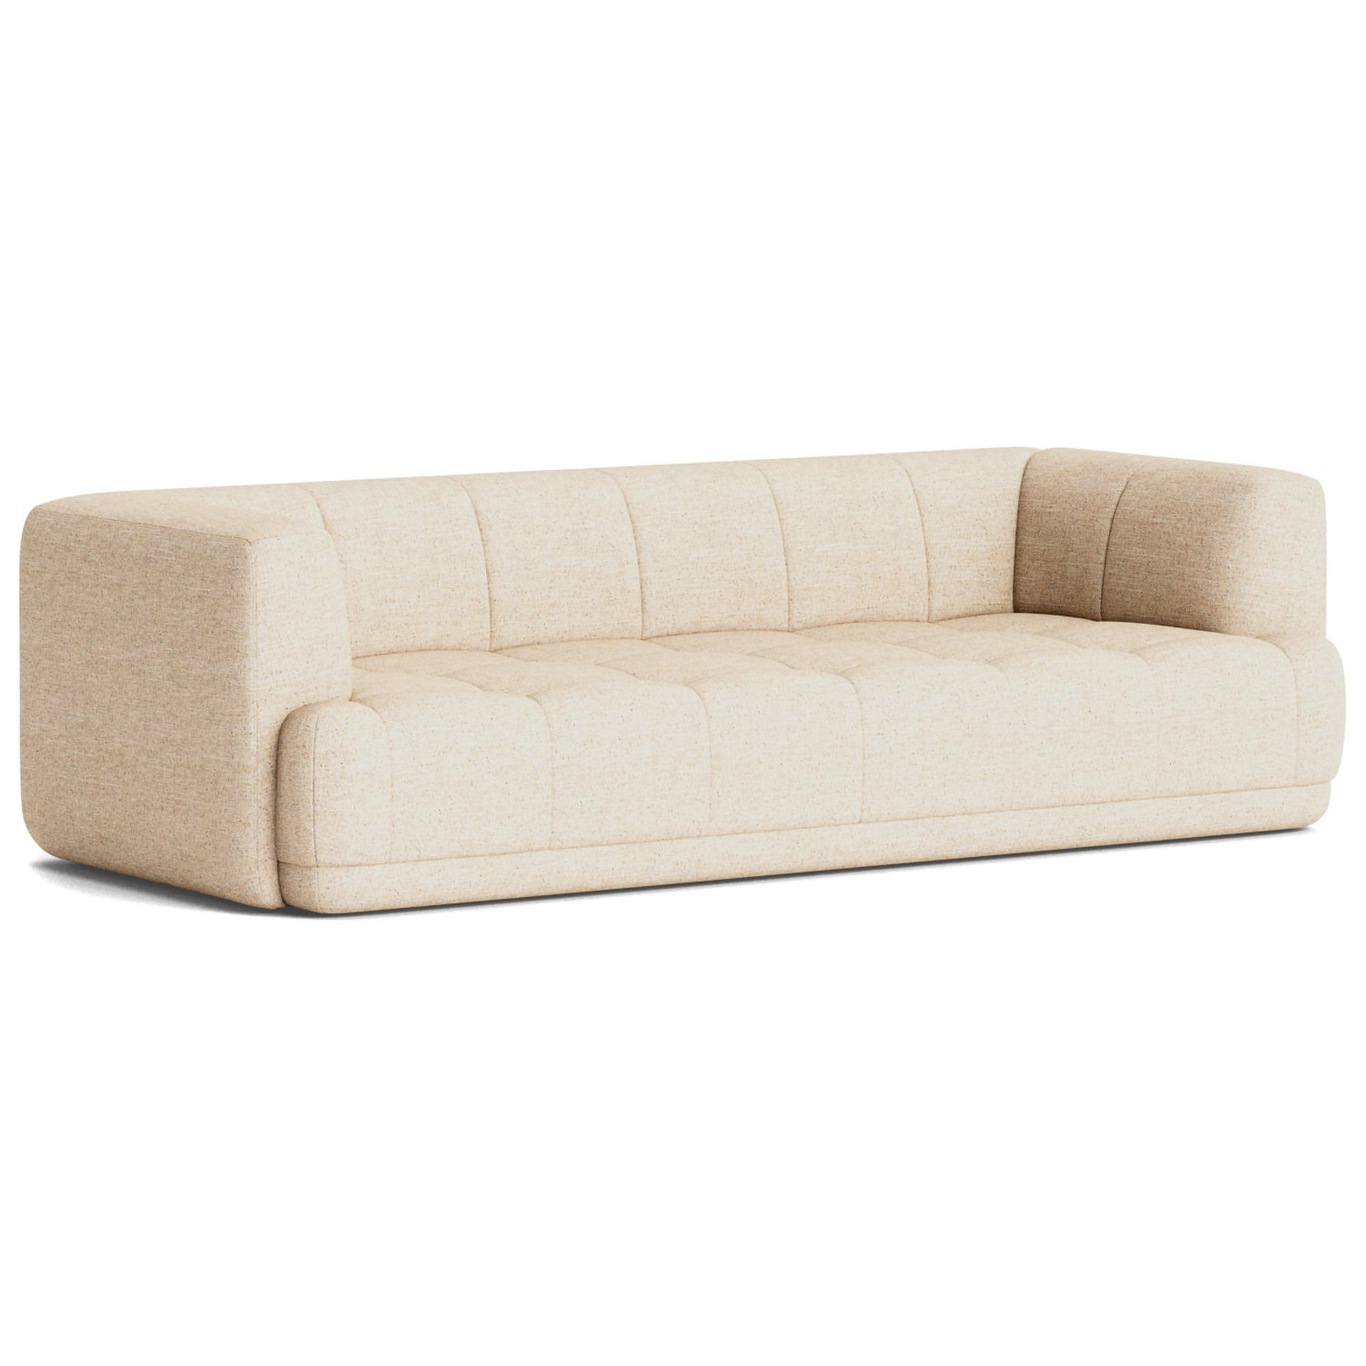 Quilton 3-Seter Sofa, Bolgheri LGG60